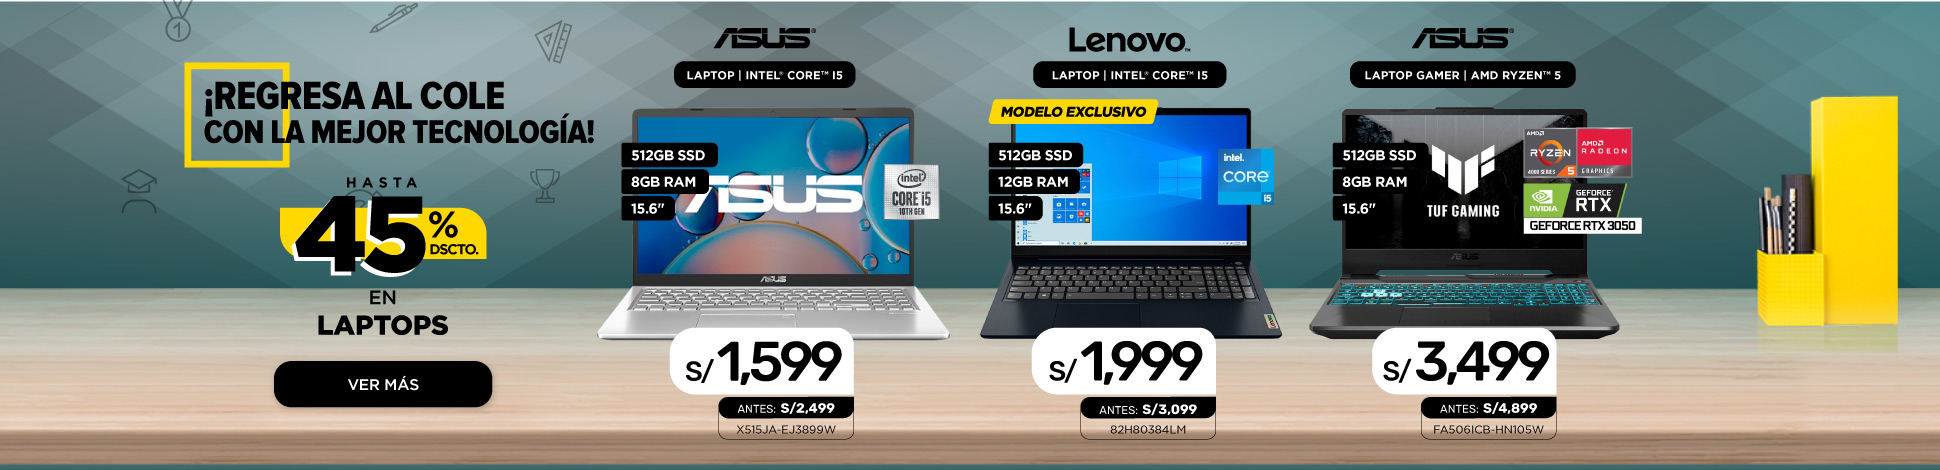 HS-lc-laptops.jpg | Juntoz.com